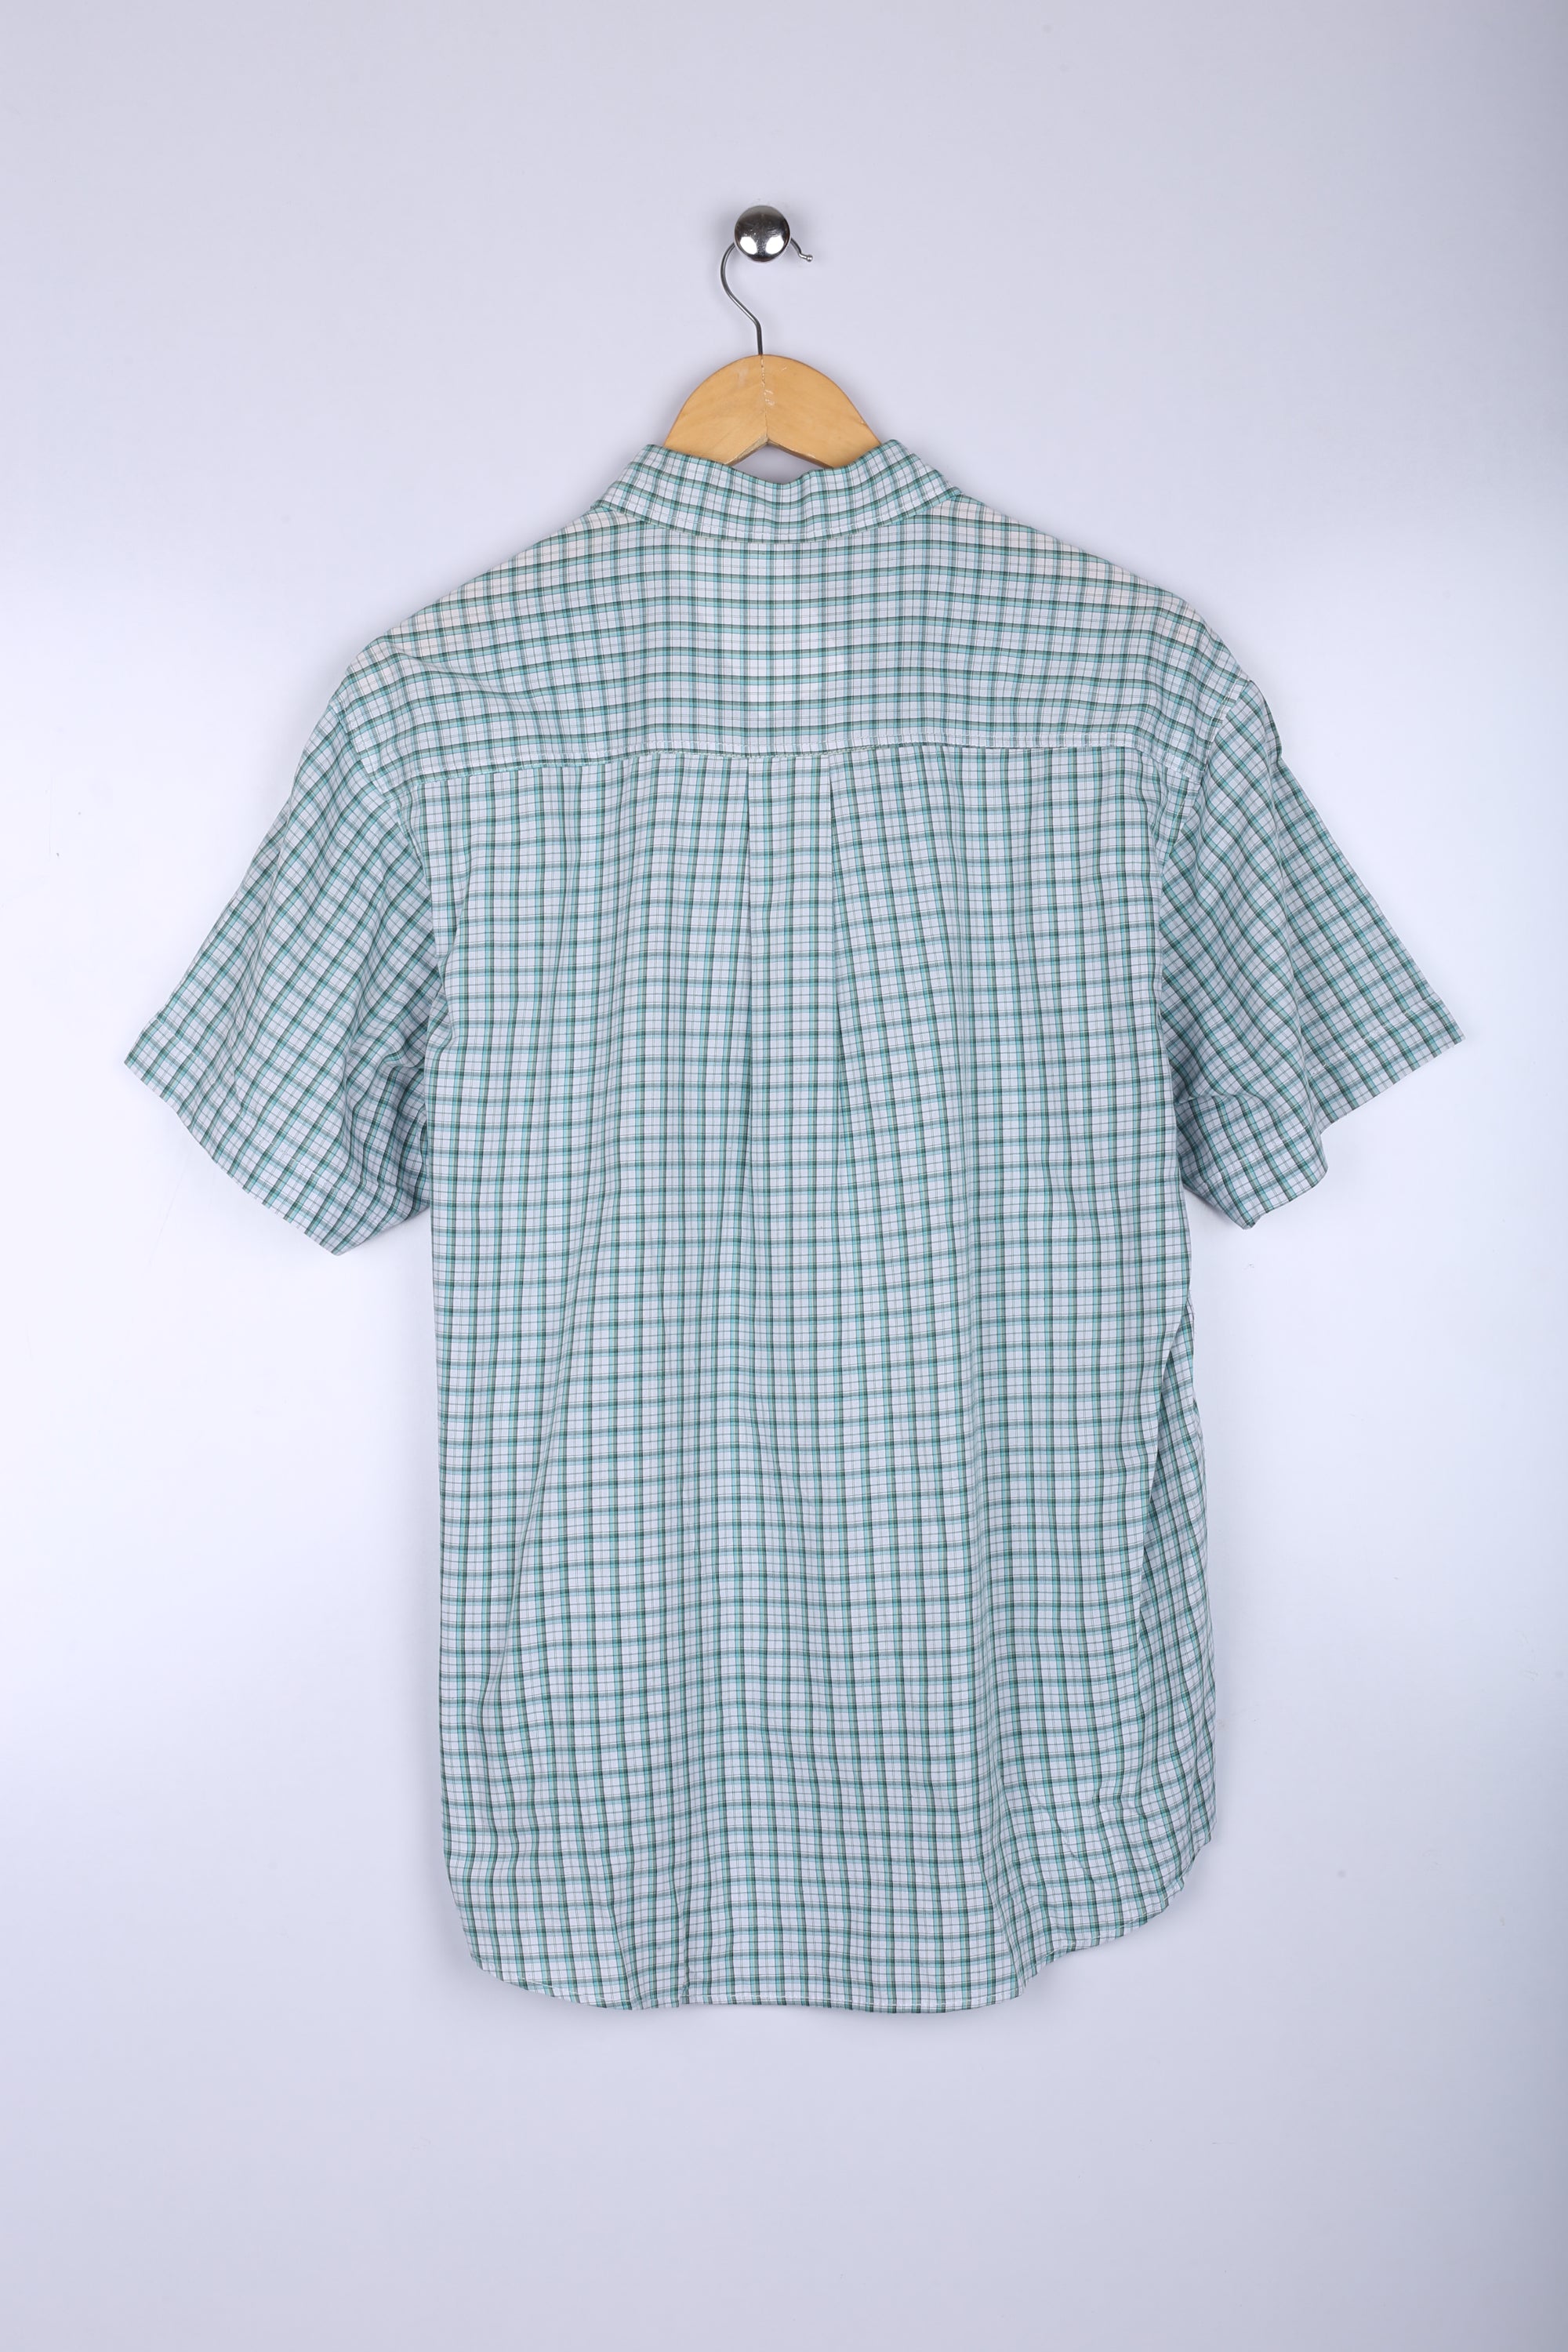 Vintage Ralph Lauren Half Sleeve Shirt Green Stripe